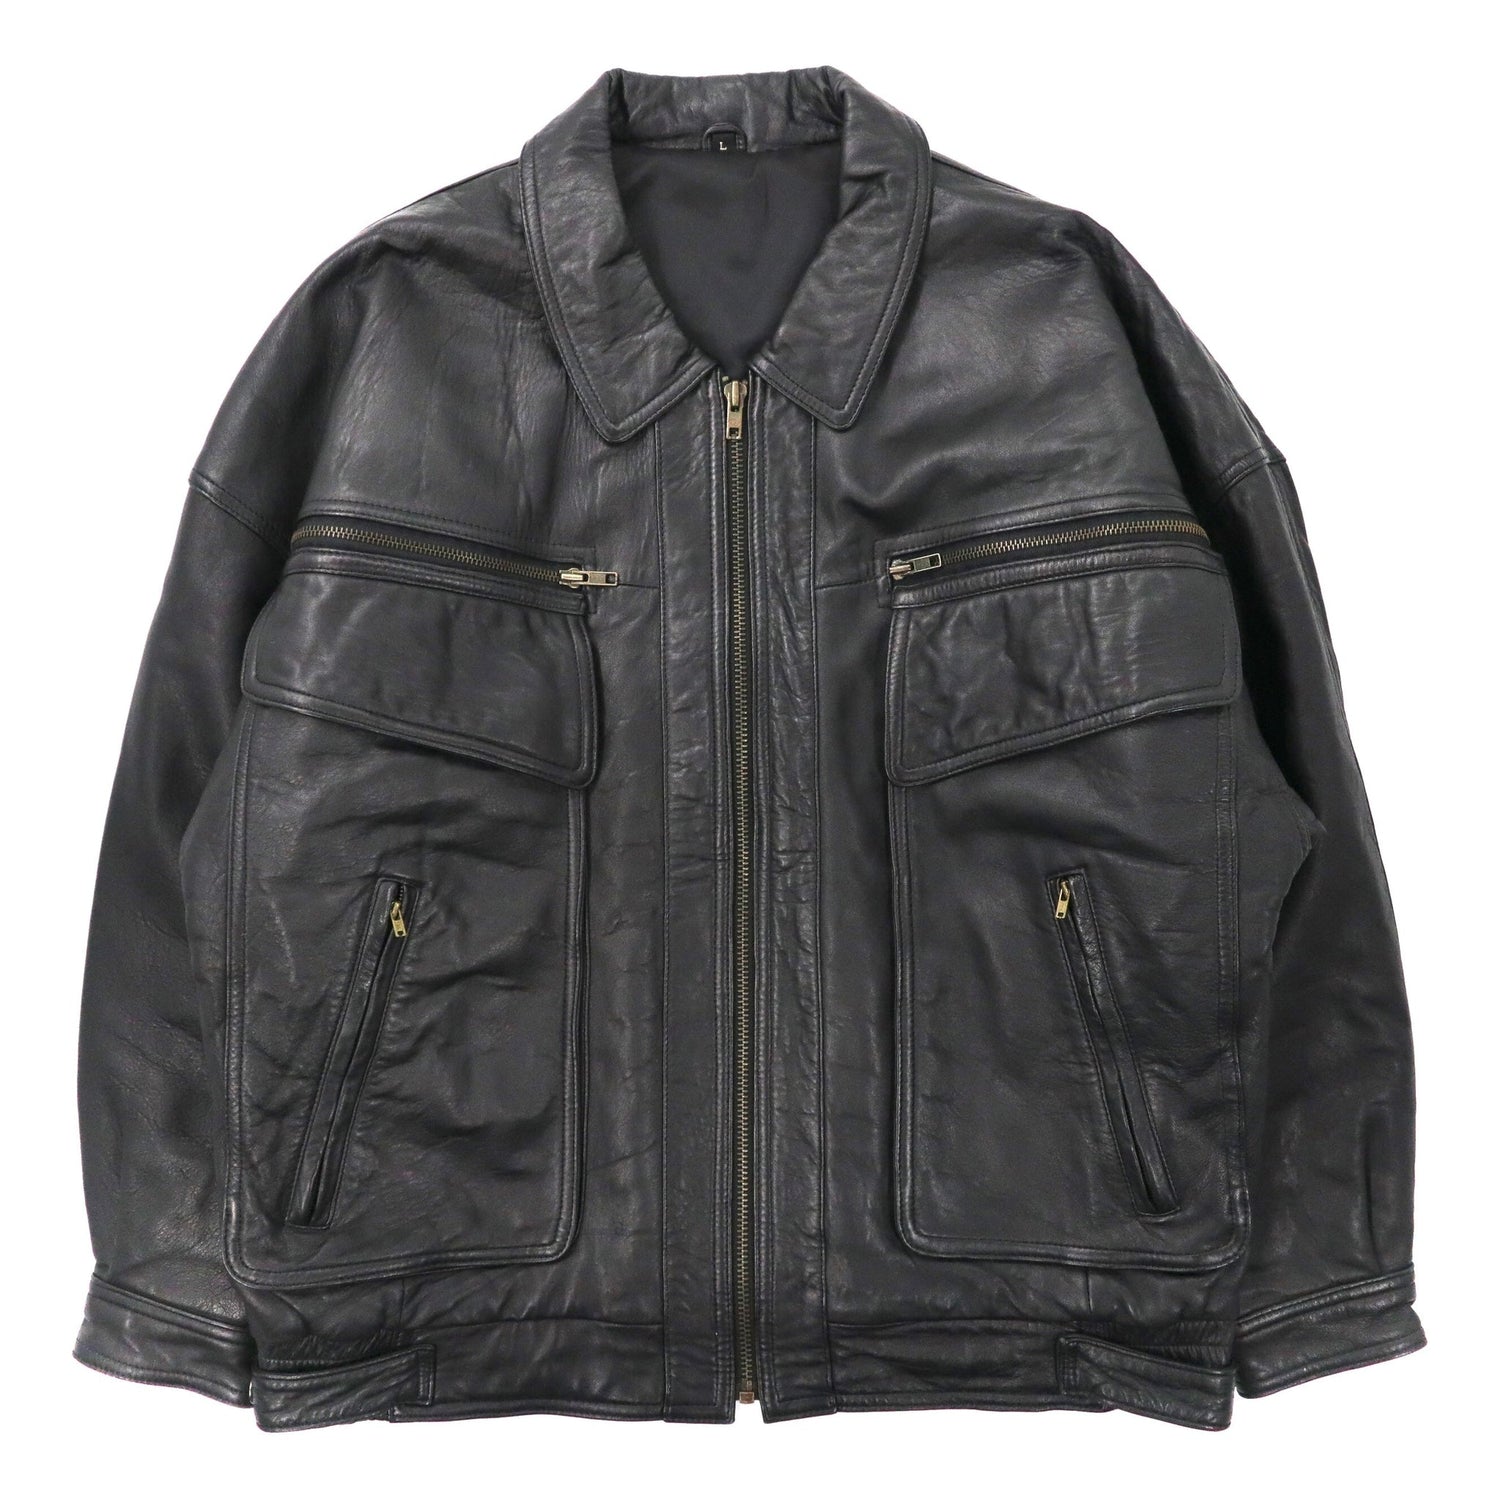 A-2 Leather Flight Jacket L Black Lamb Leather – 日本然リトテ